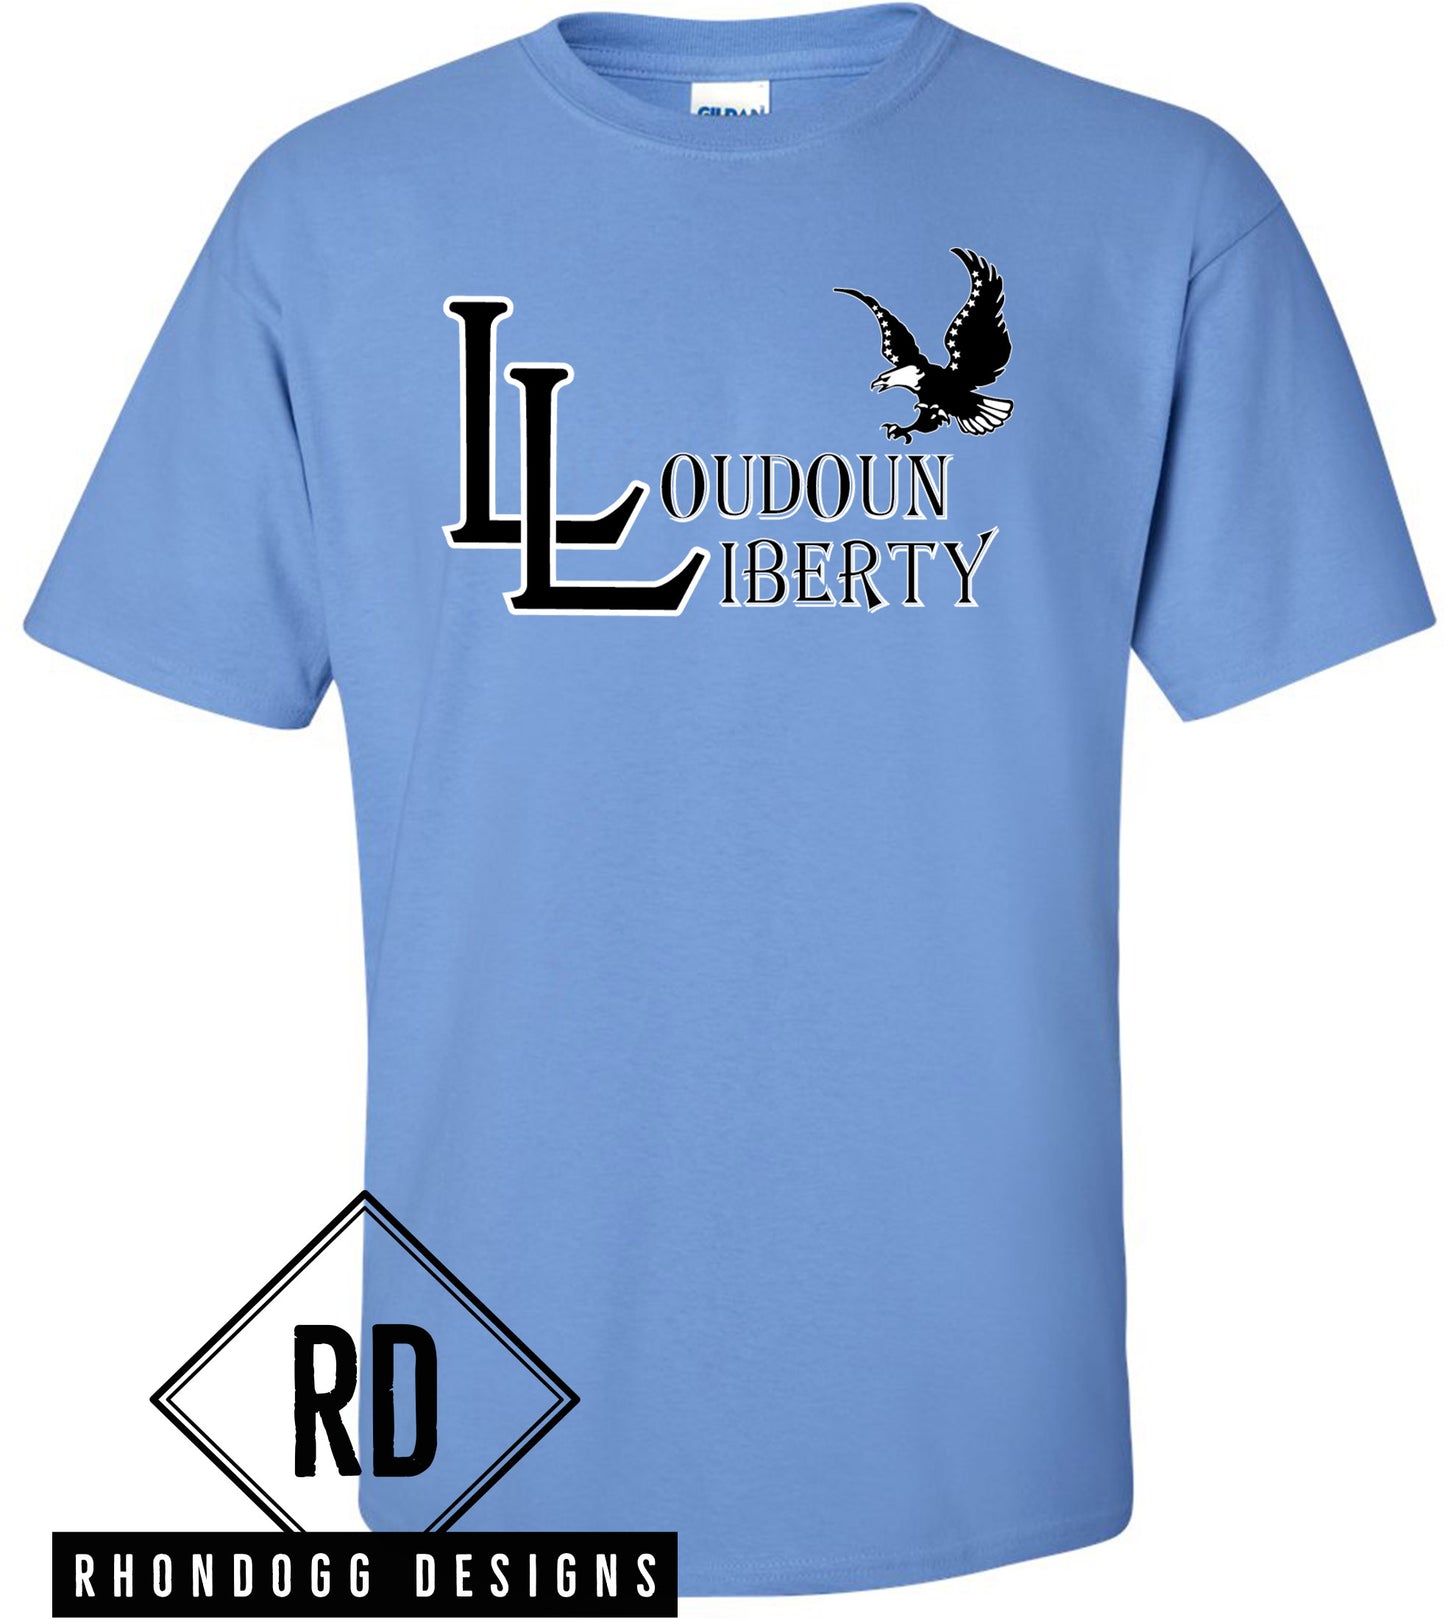 Loudoun Liberty Cotton T-Shirt